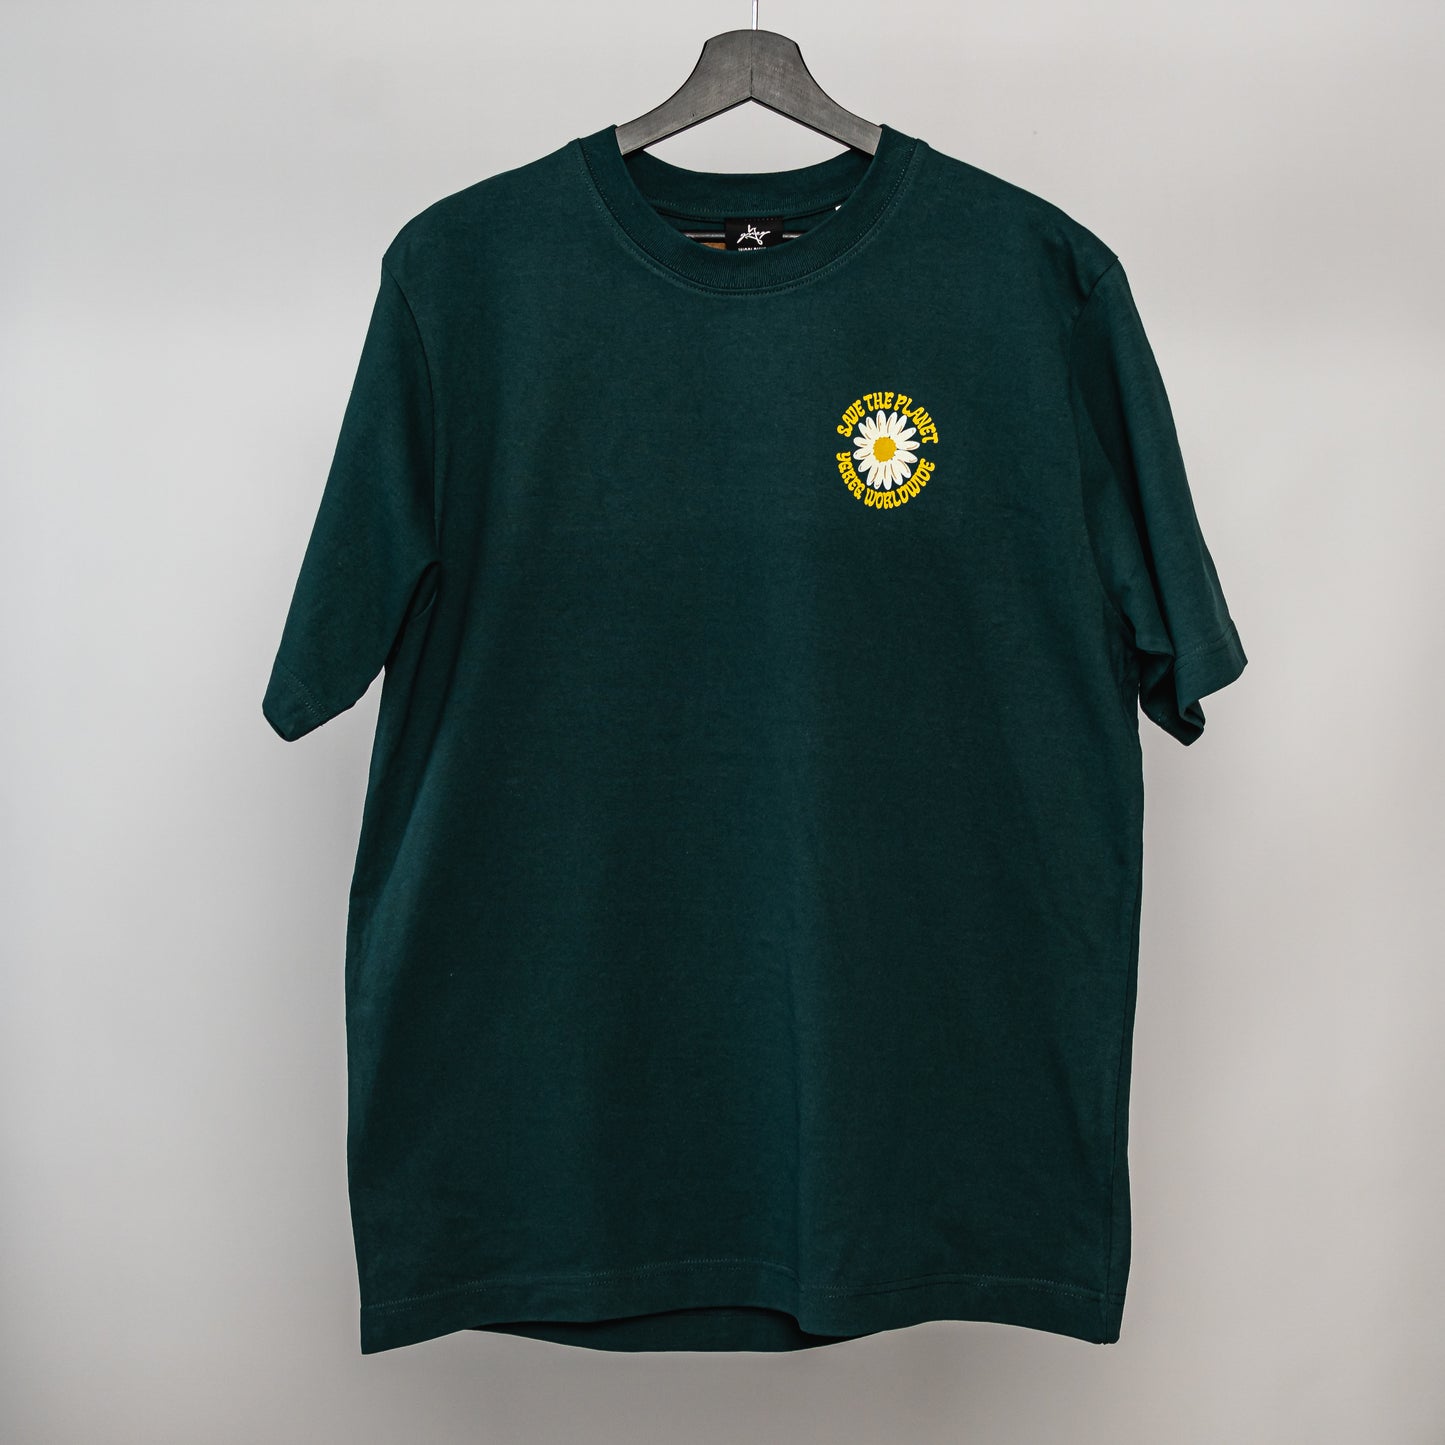 YGREG 'Save the planet' Green t-shirt